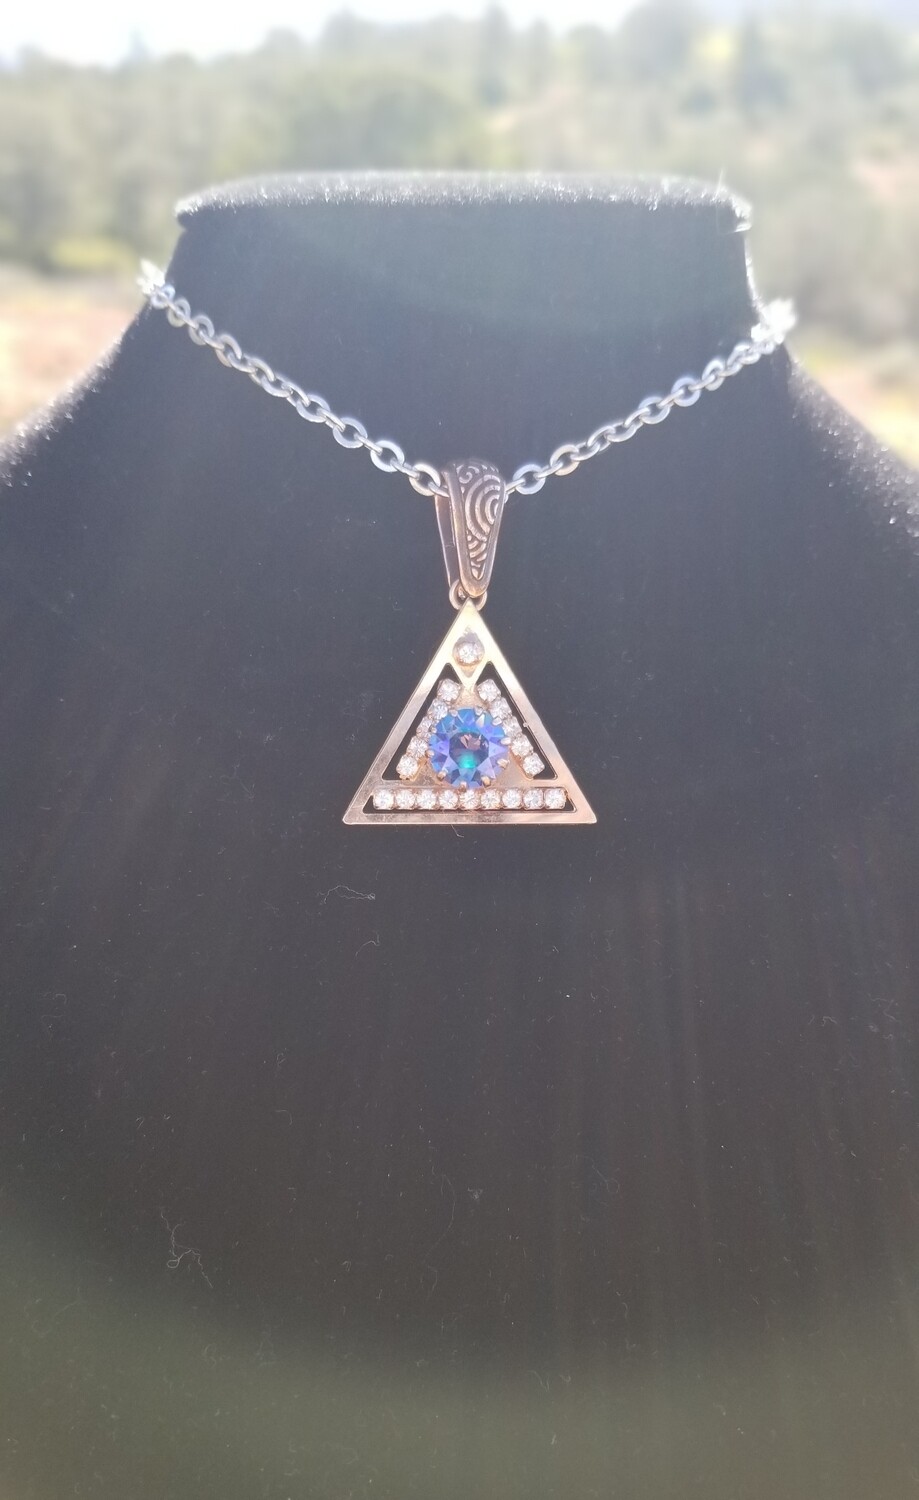 Blue RADIANCE Swarovski Crystal {Pyramid of Light Pendant} with Sedona White light Crystals/May Day Sale $113/$313.00